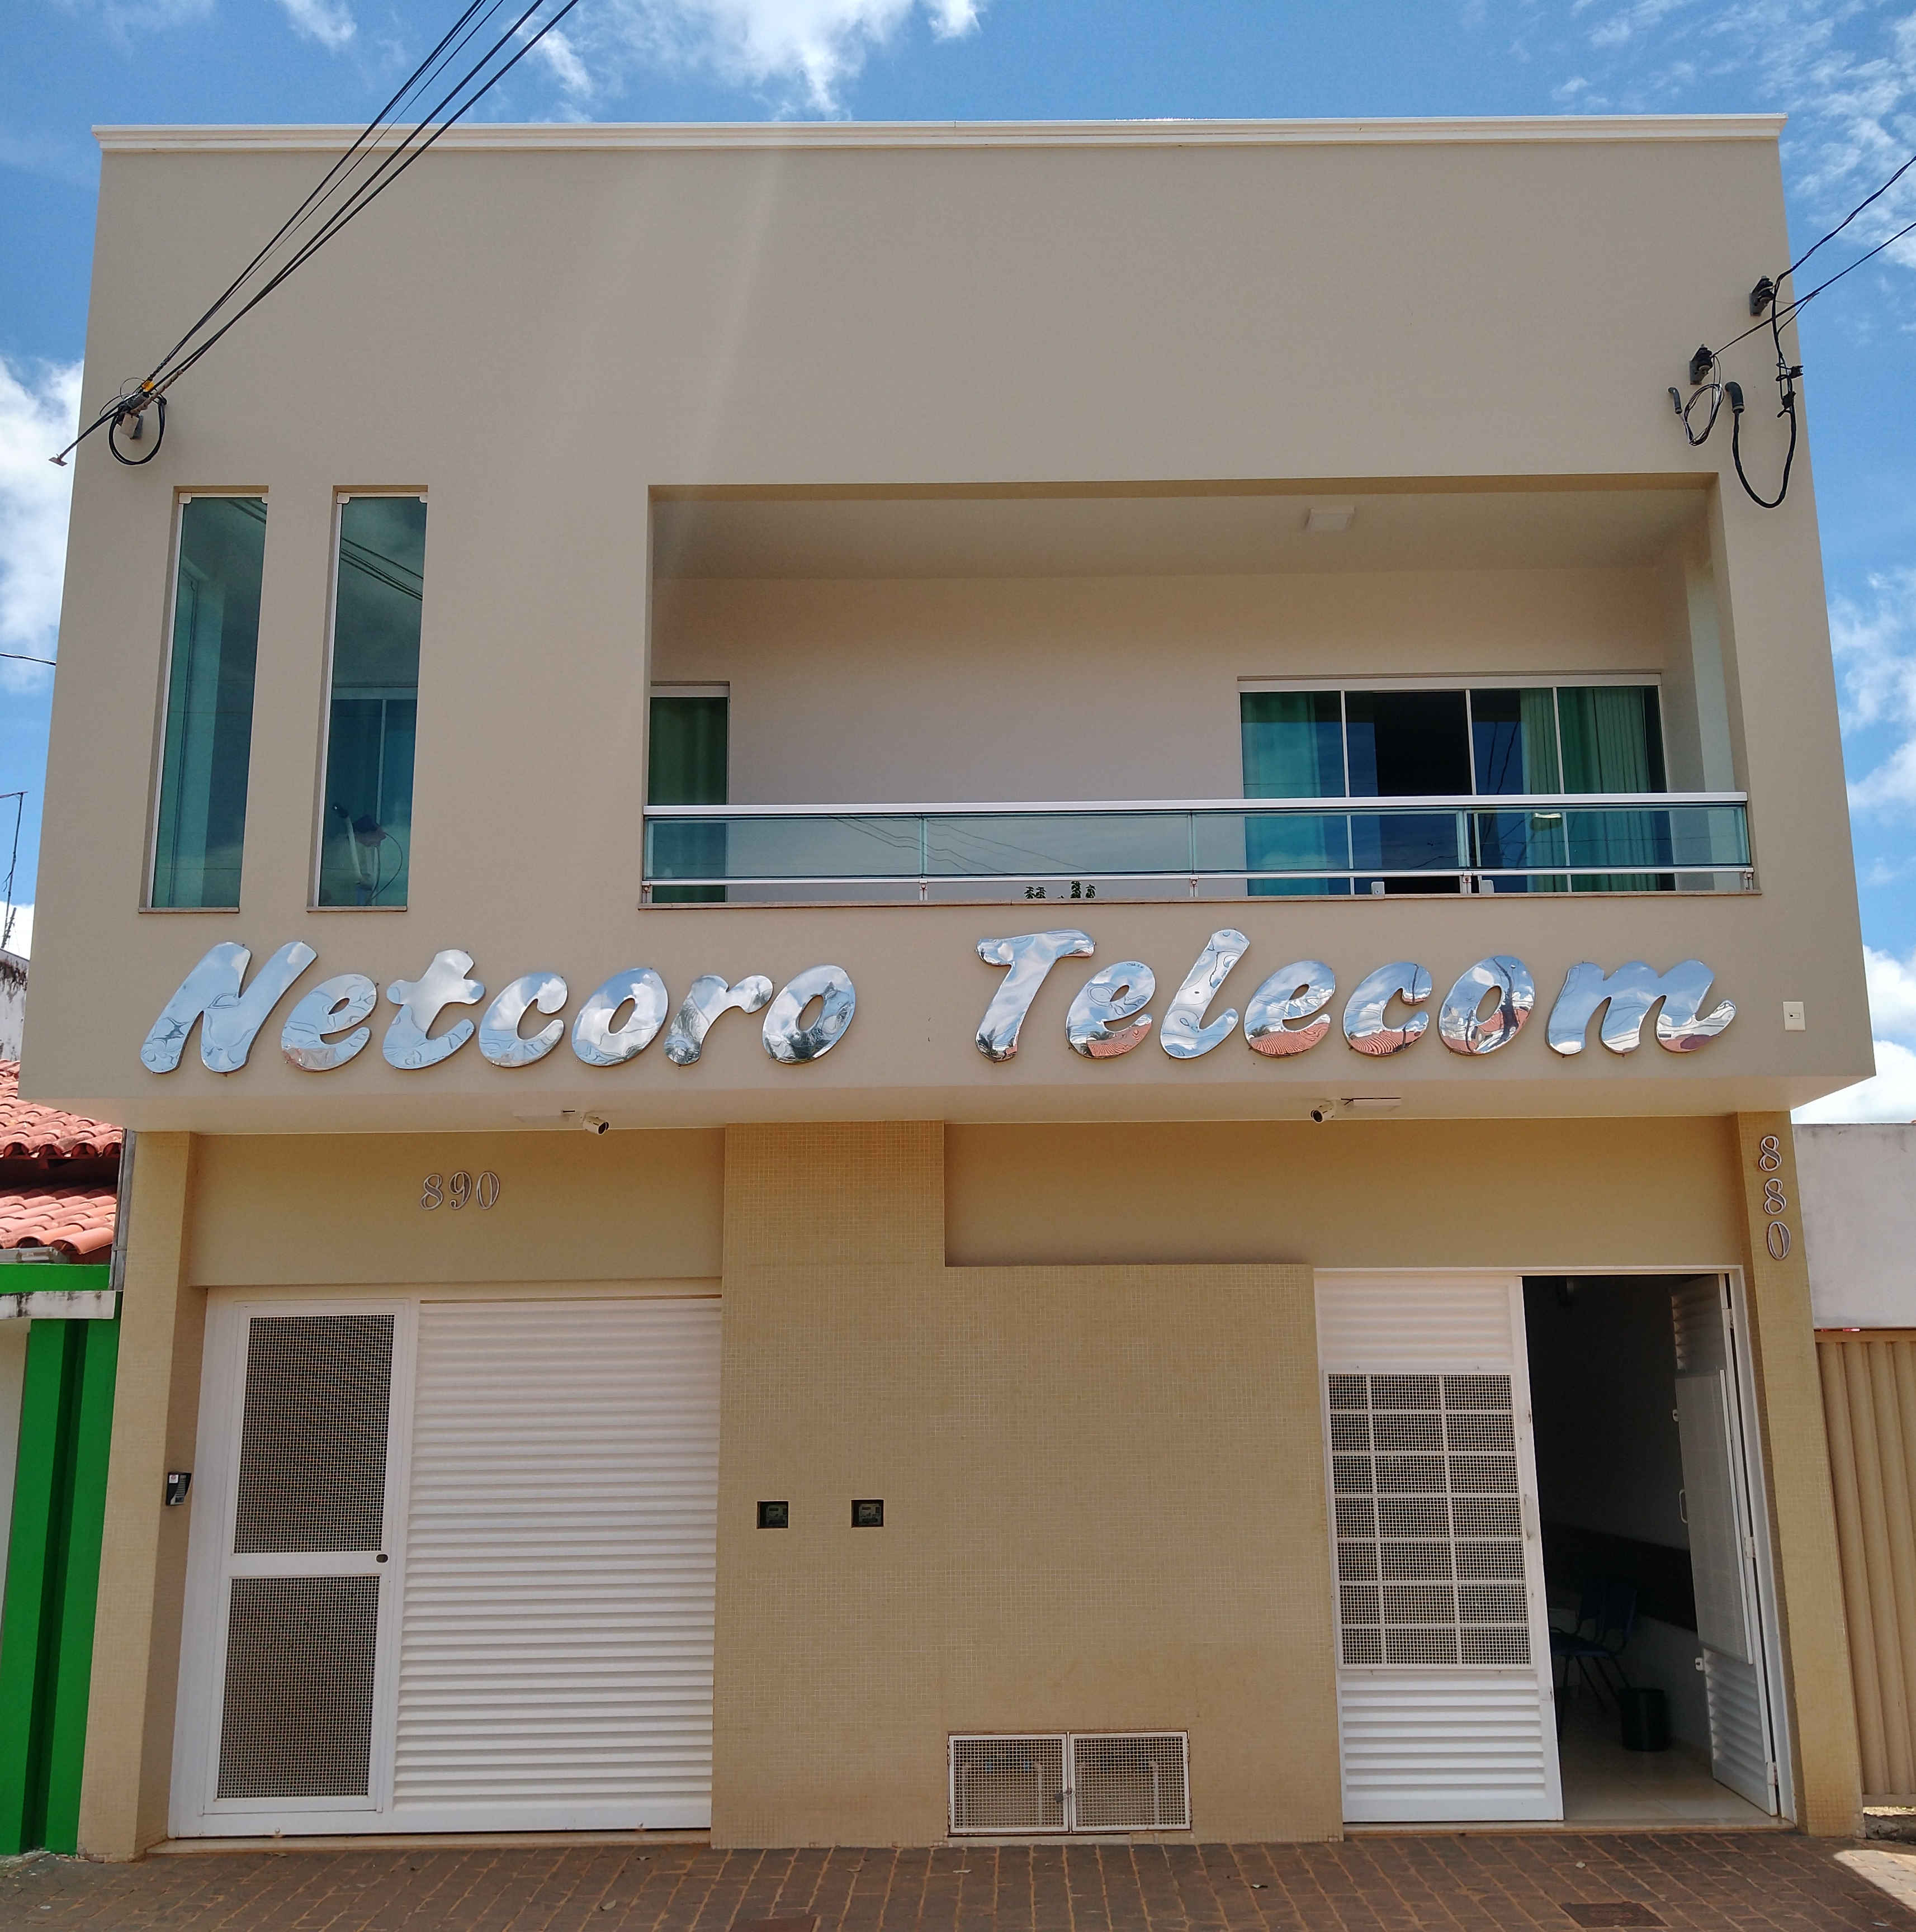 NETCORO Telecom